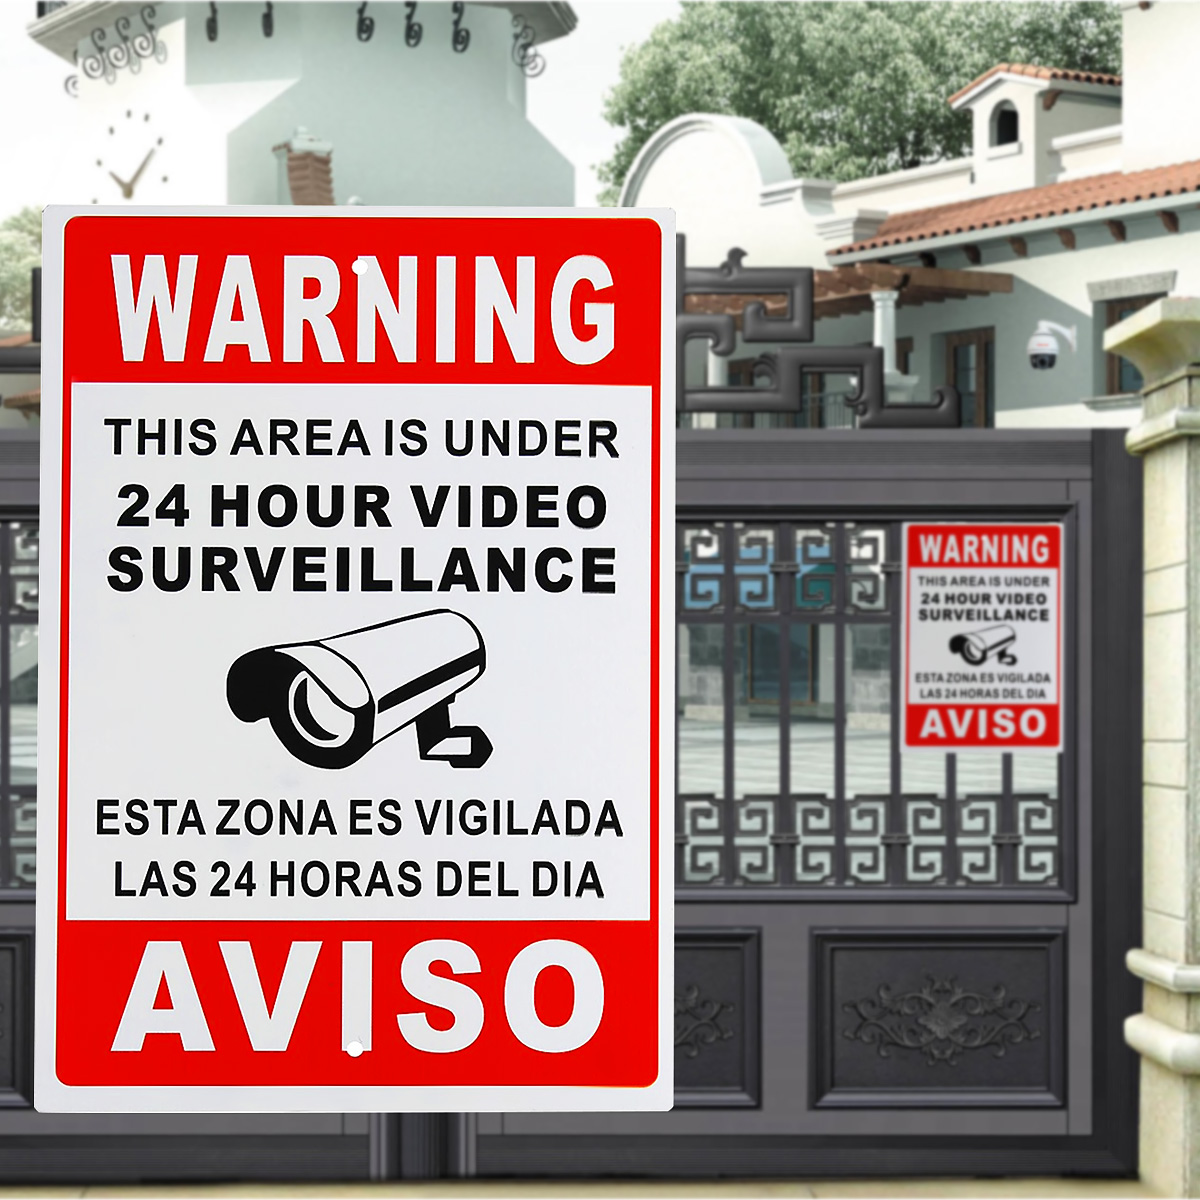 

24 Hour Video Surveillance Warning Sign Sticker Security Video Spanish English Metal